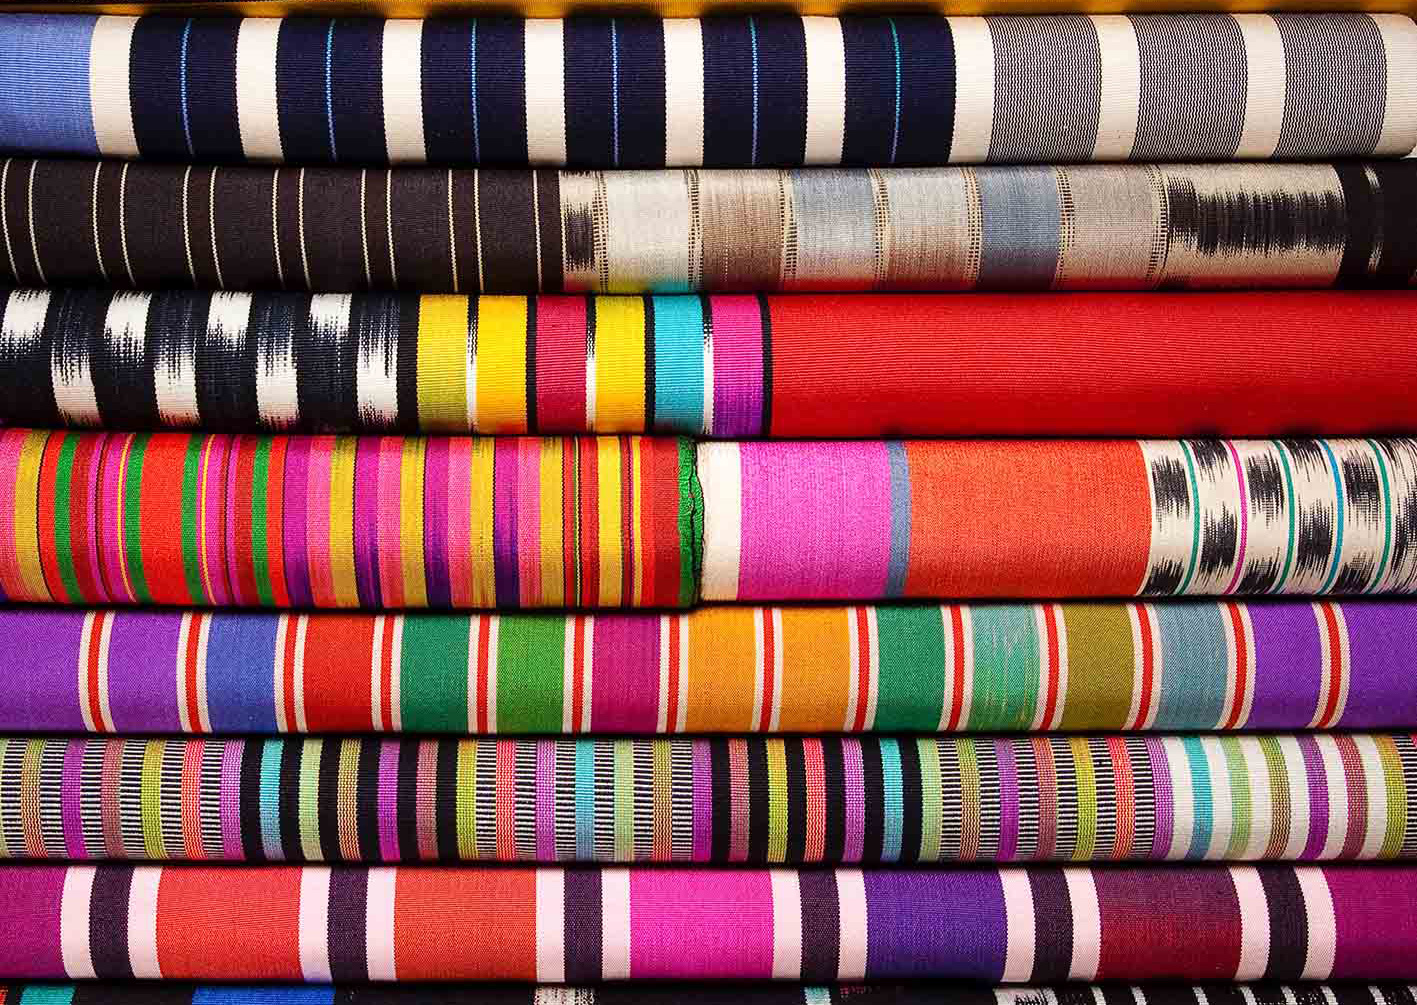 Textile collection